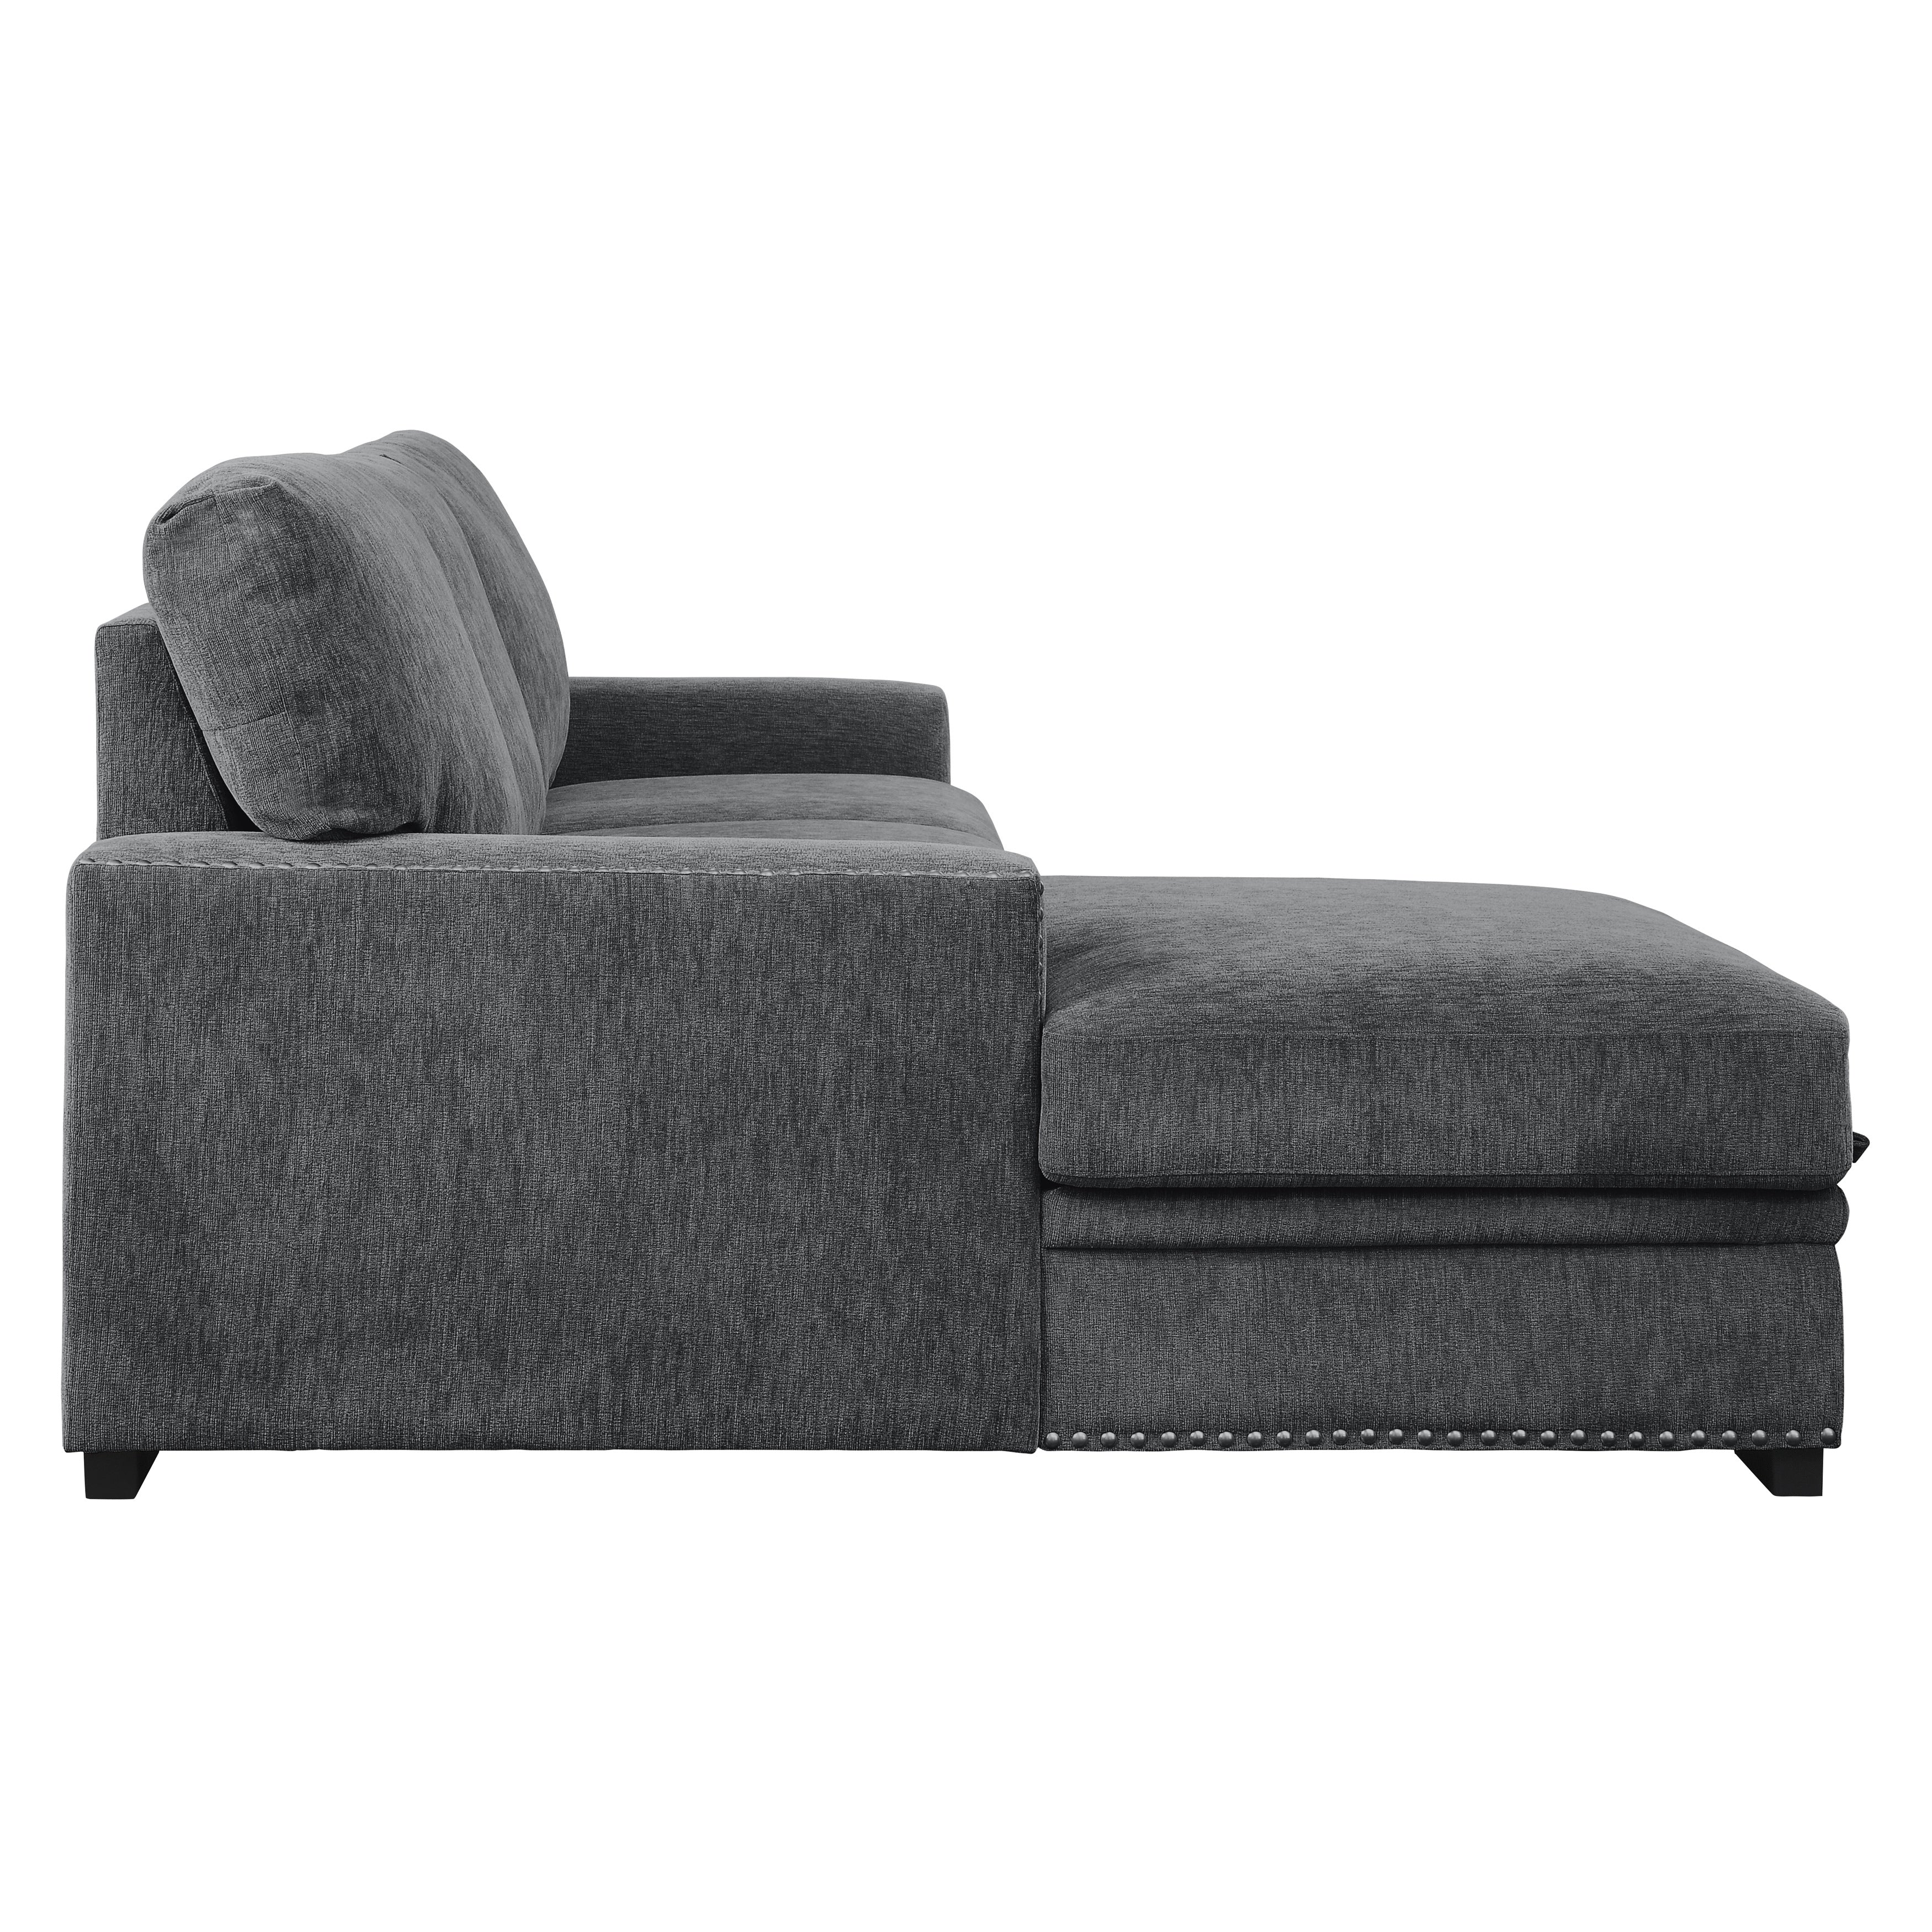 Morelia Charcoal LAF Storage Sleeper Sofa Chaise - 9468CC*2LC2R - Bien Home Furniture &amp; Electronics